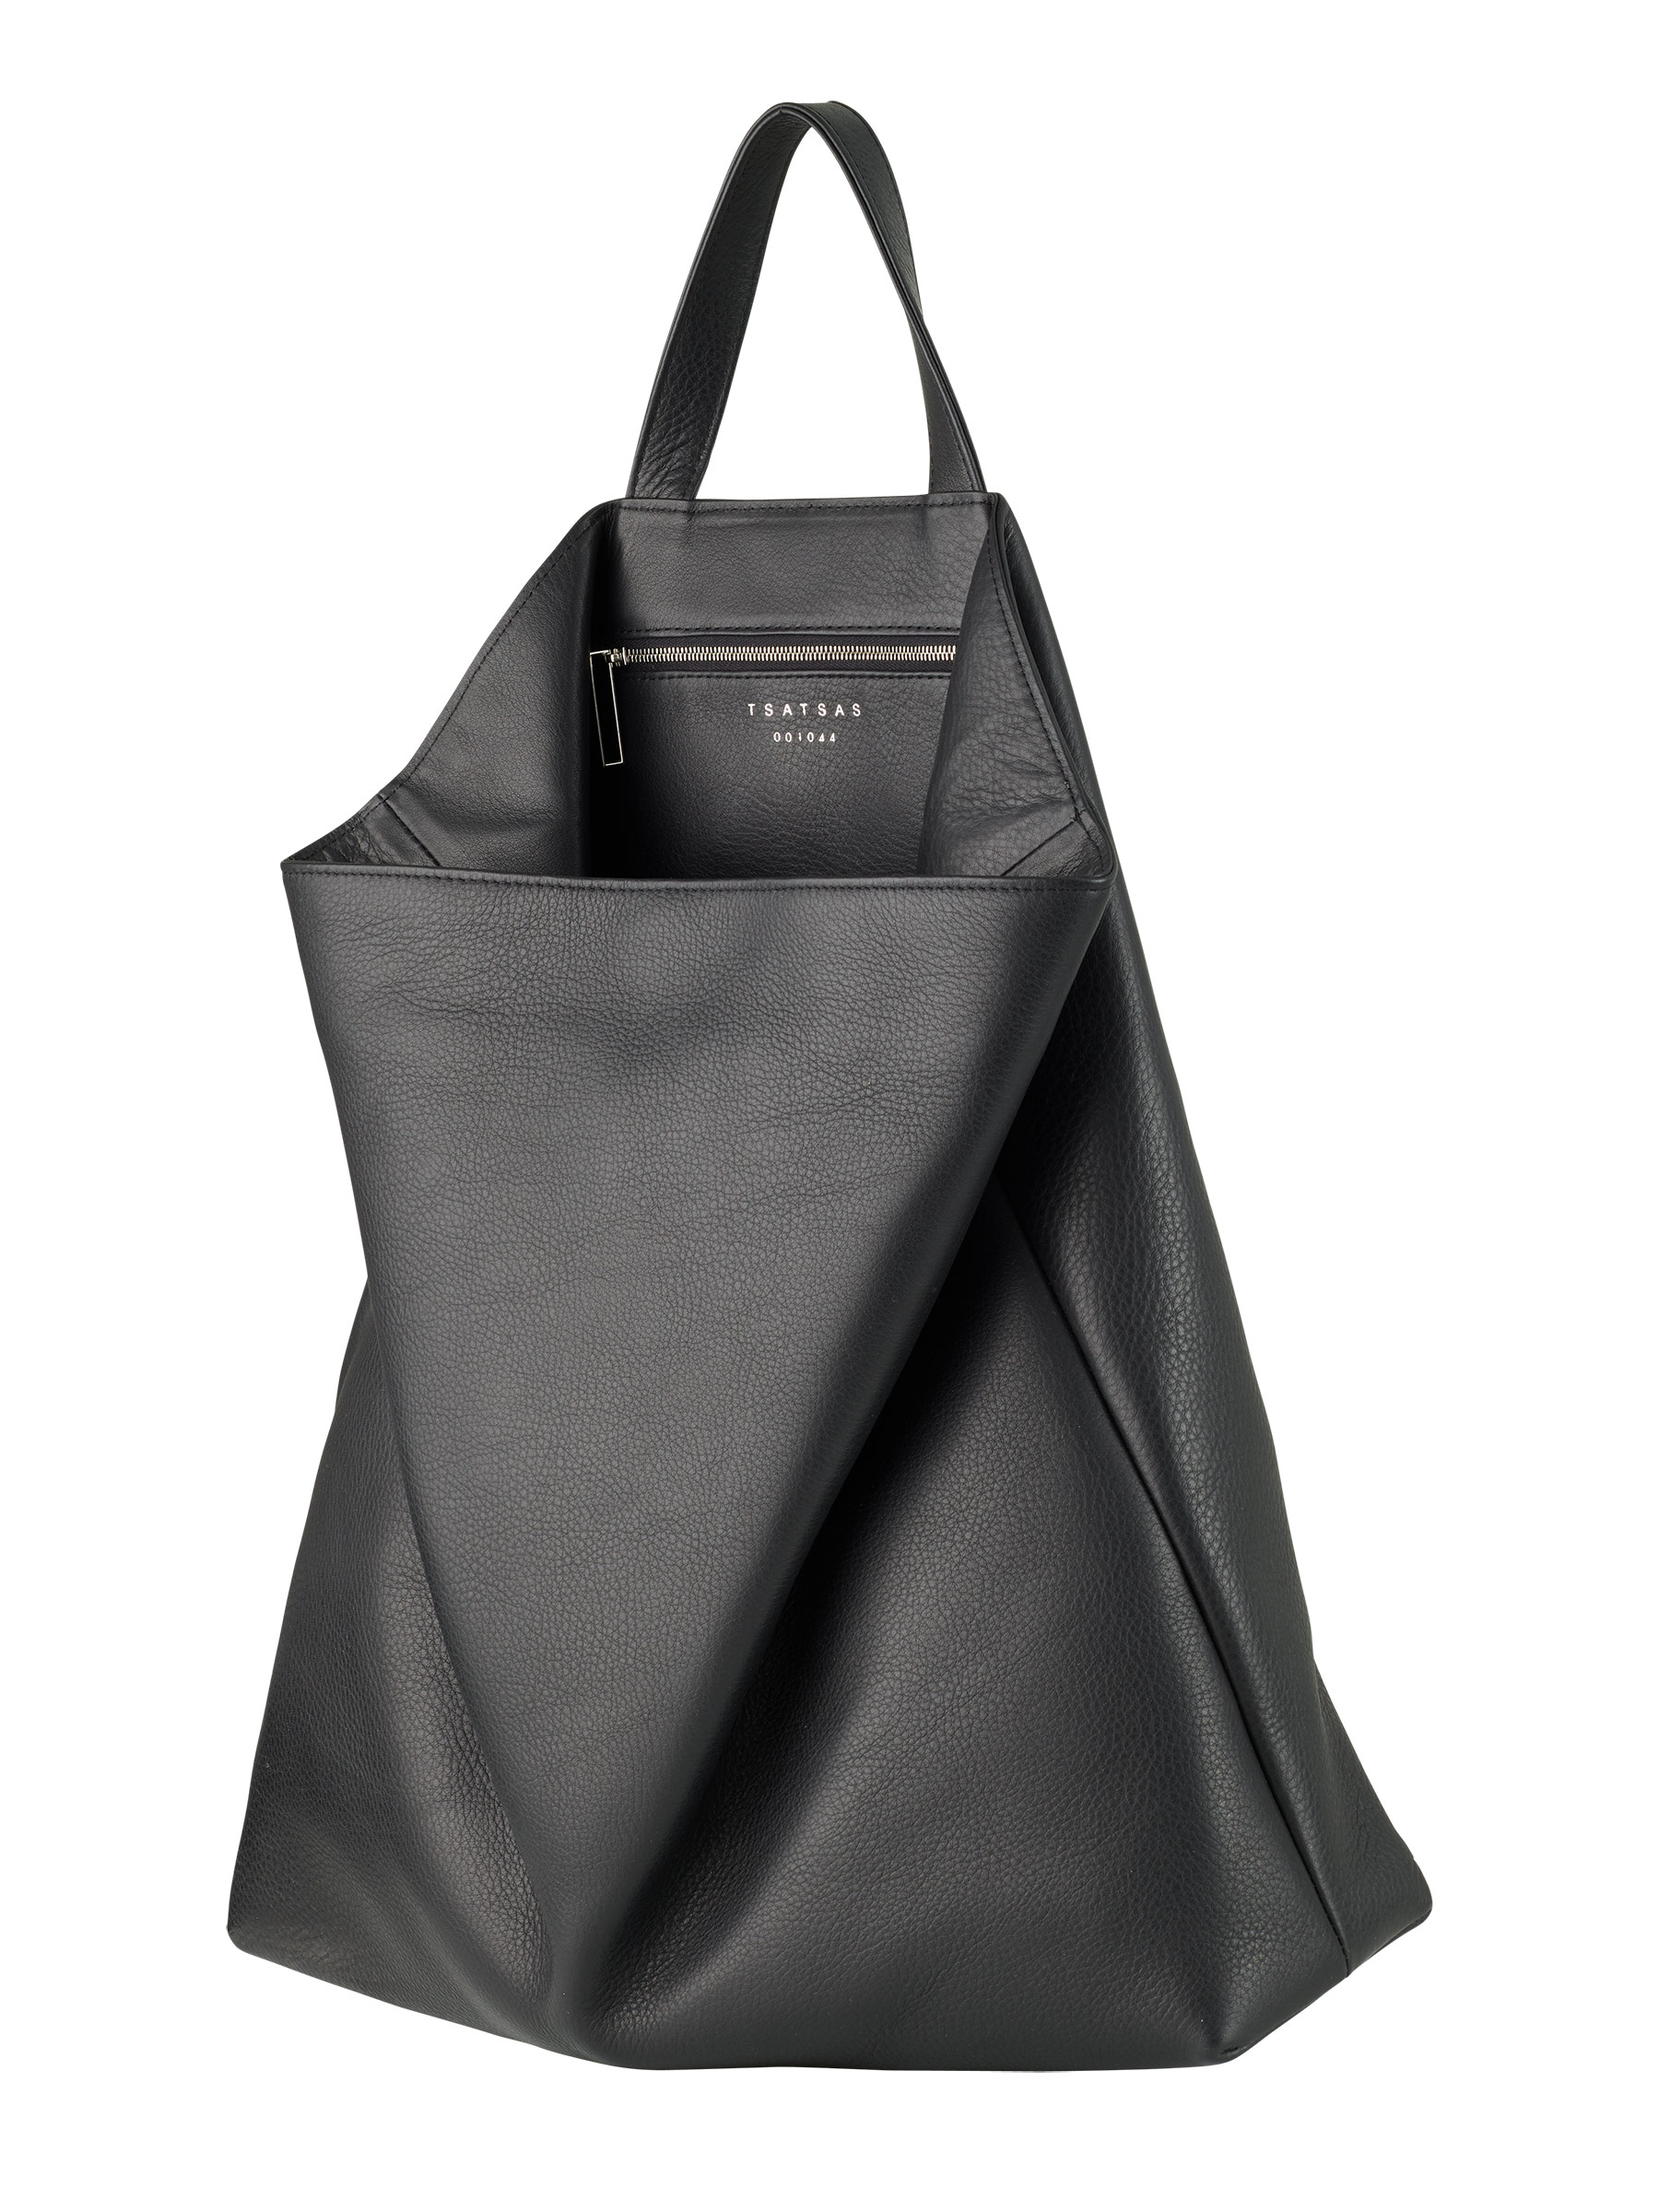 FLUKE tote bag in black calfskin leather | TSATSAS